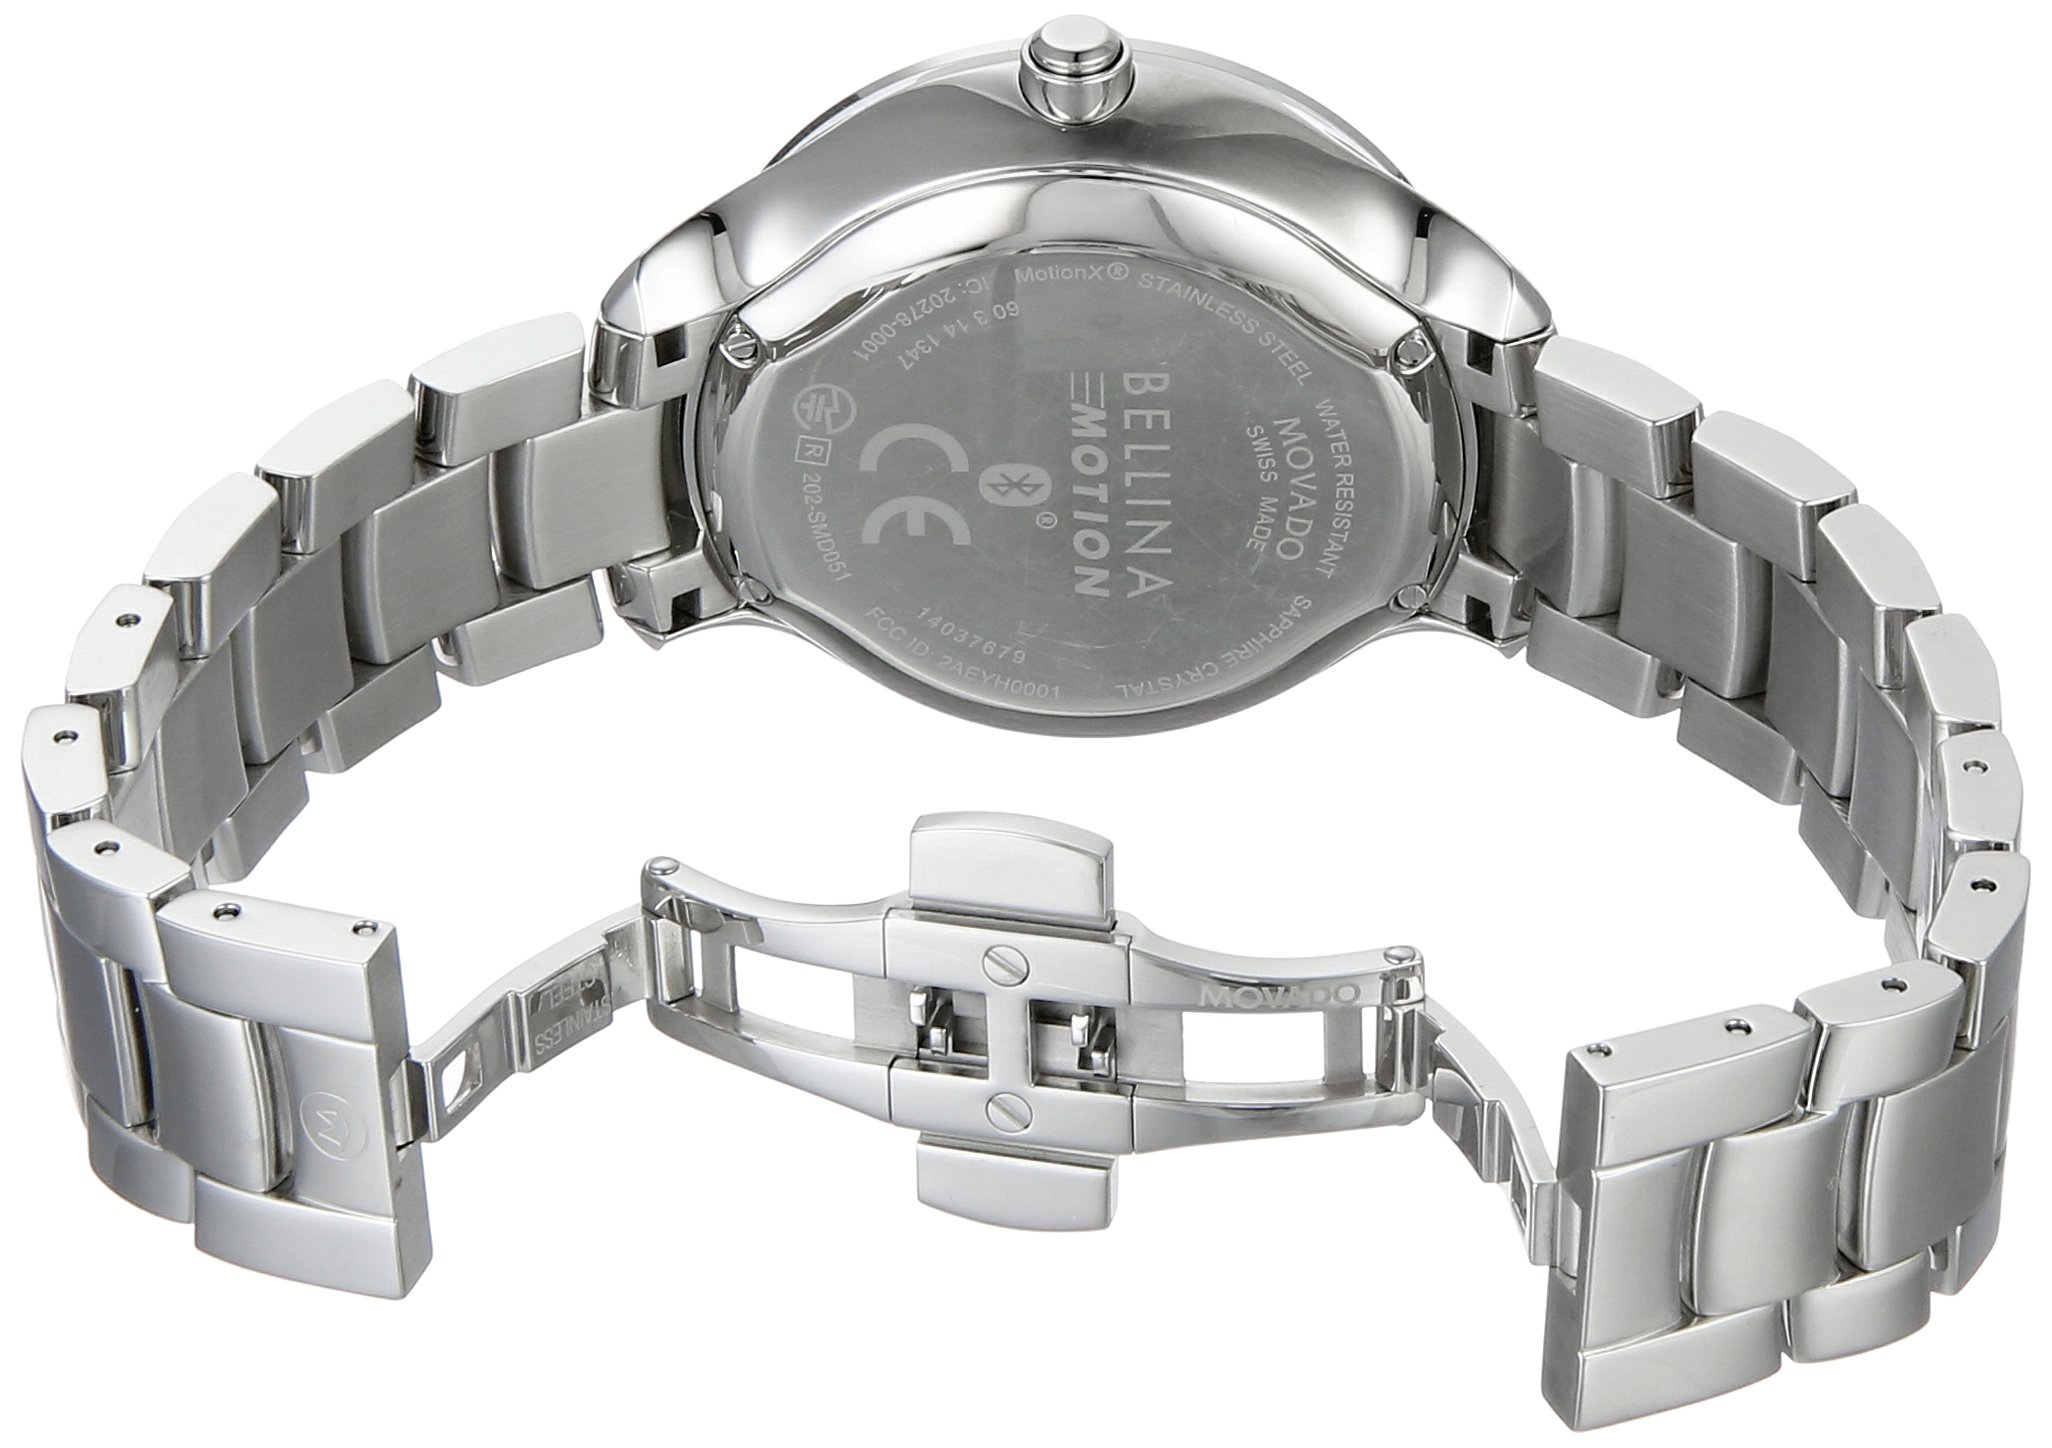 Movado Women's 0660004 Analog Display Swiss Quartz Silver Smartwatch